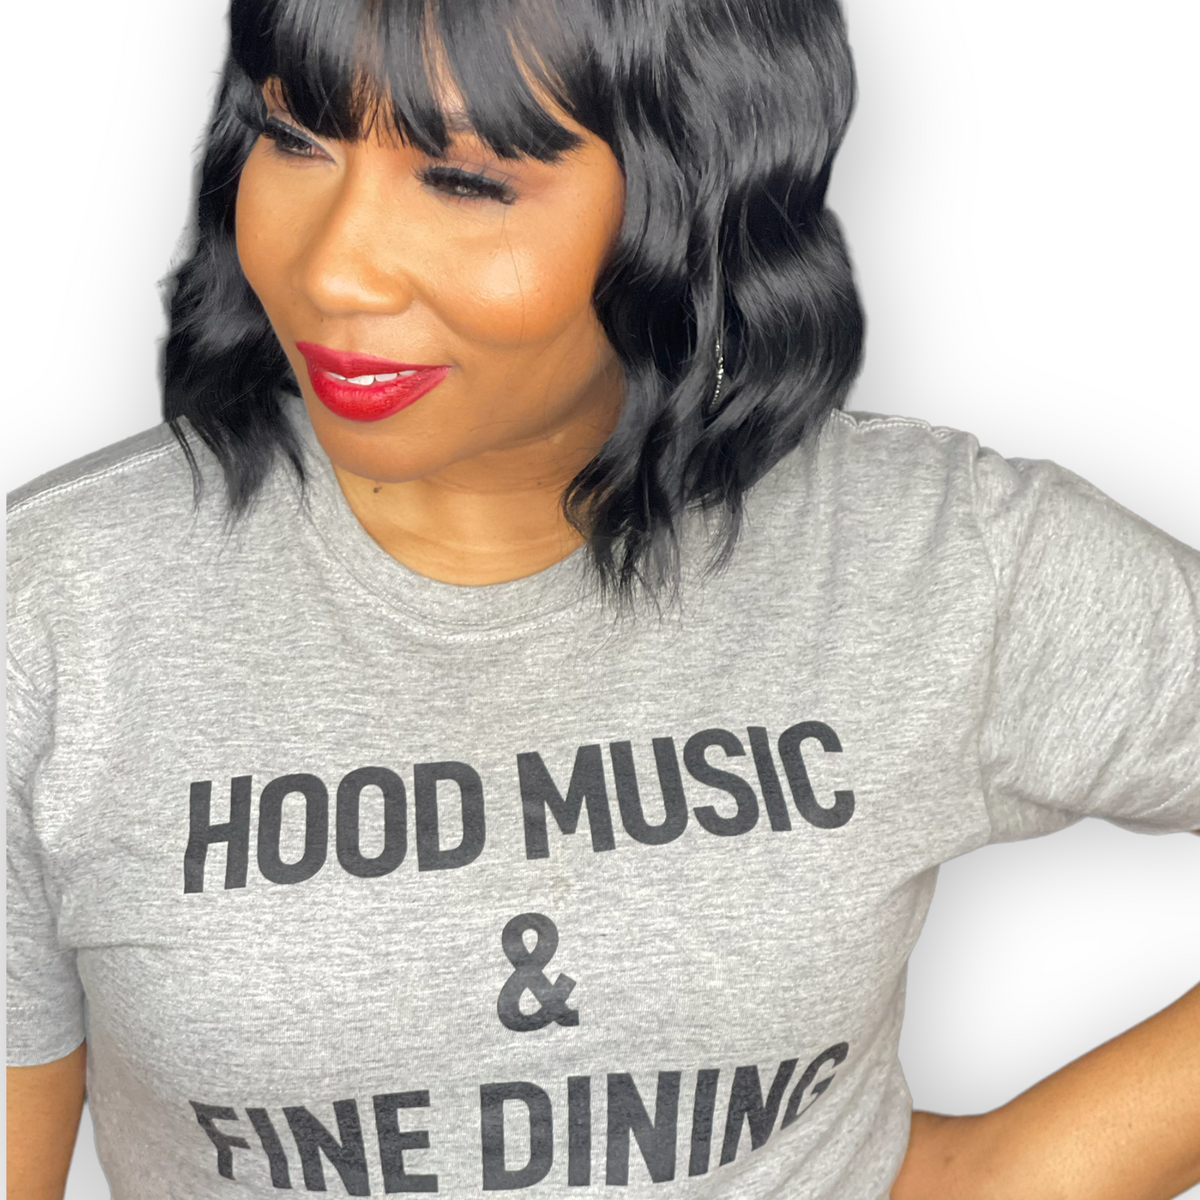 "Hood Music & Fine Dining"